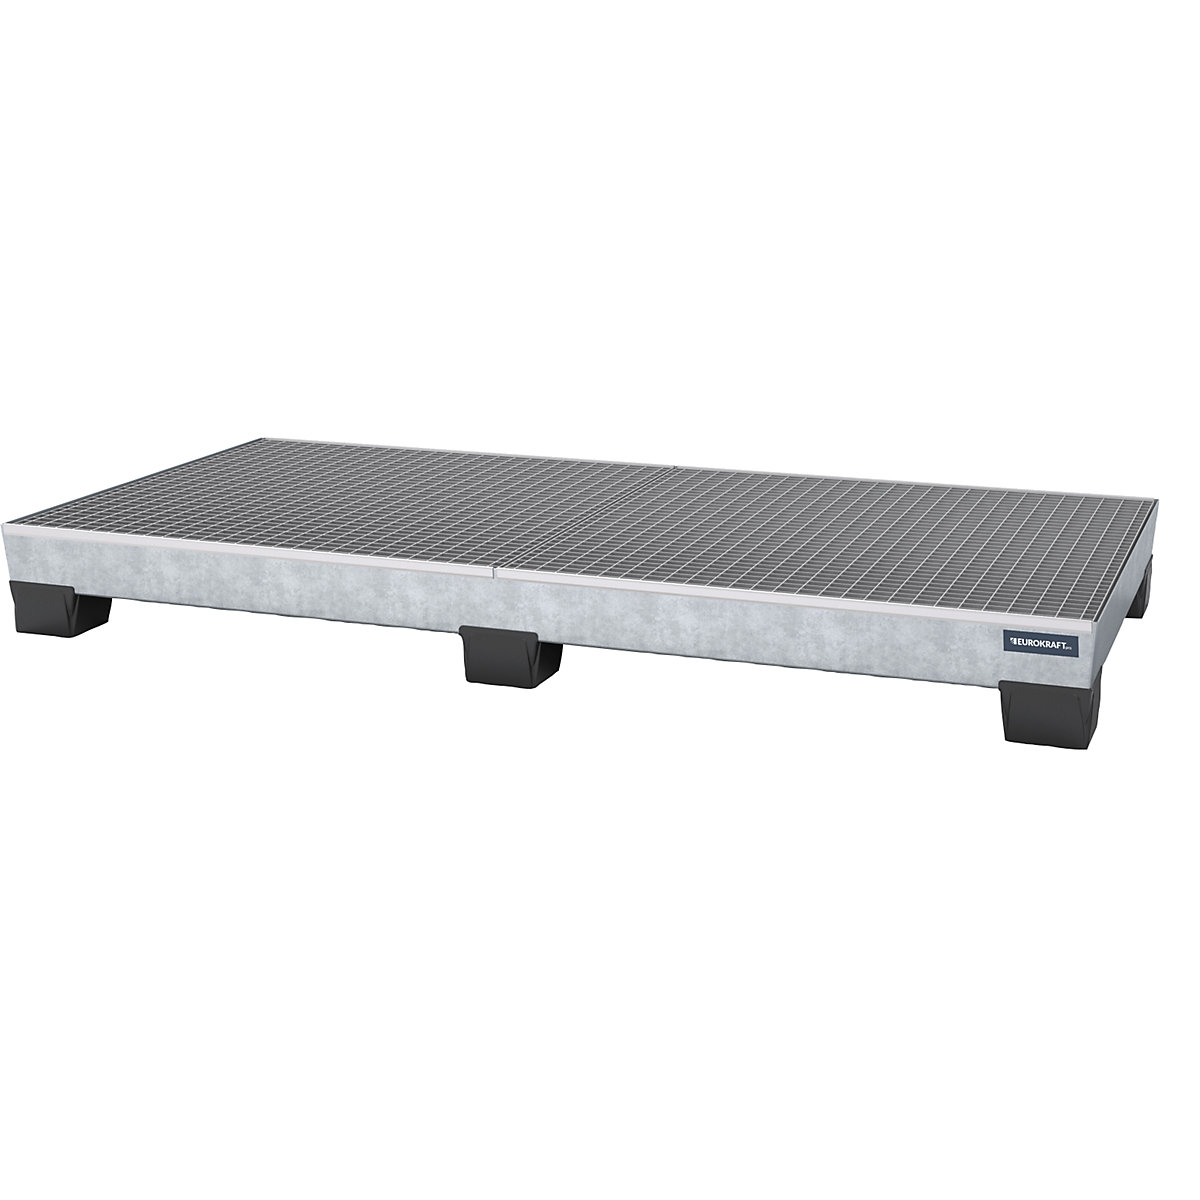 Steel sump tray with plastic feet - eurokraft pro